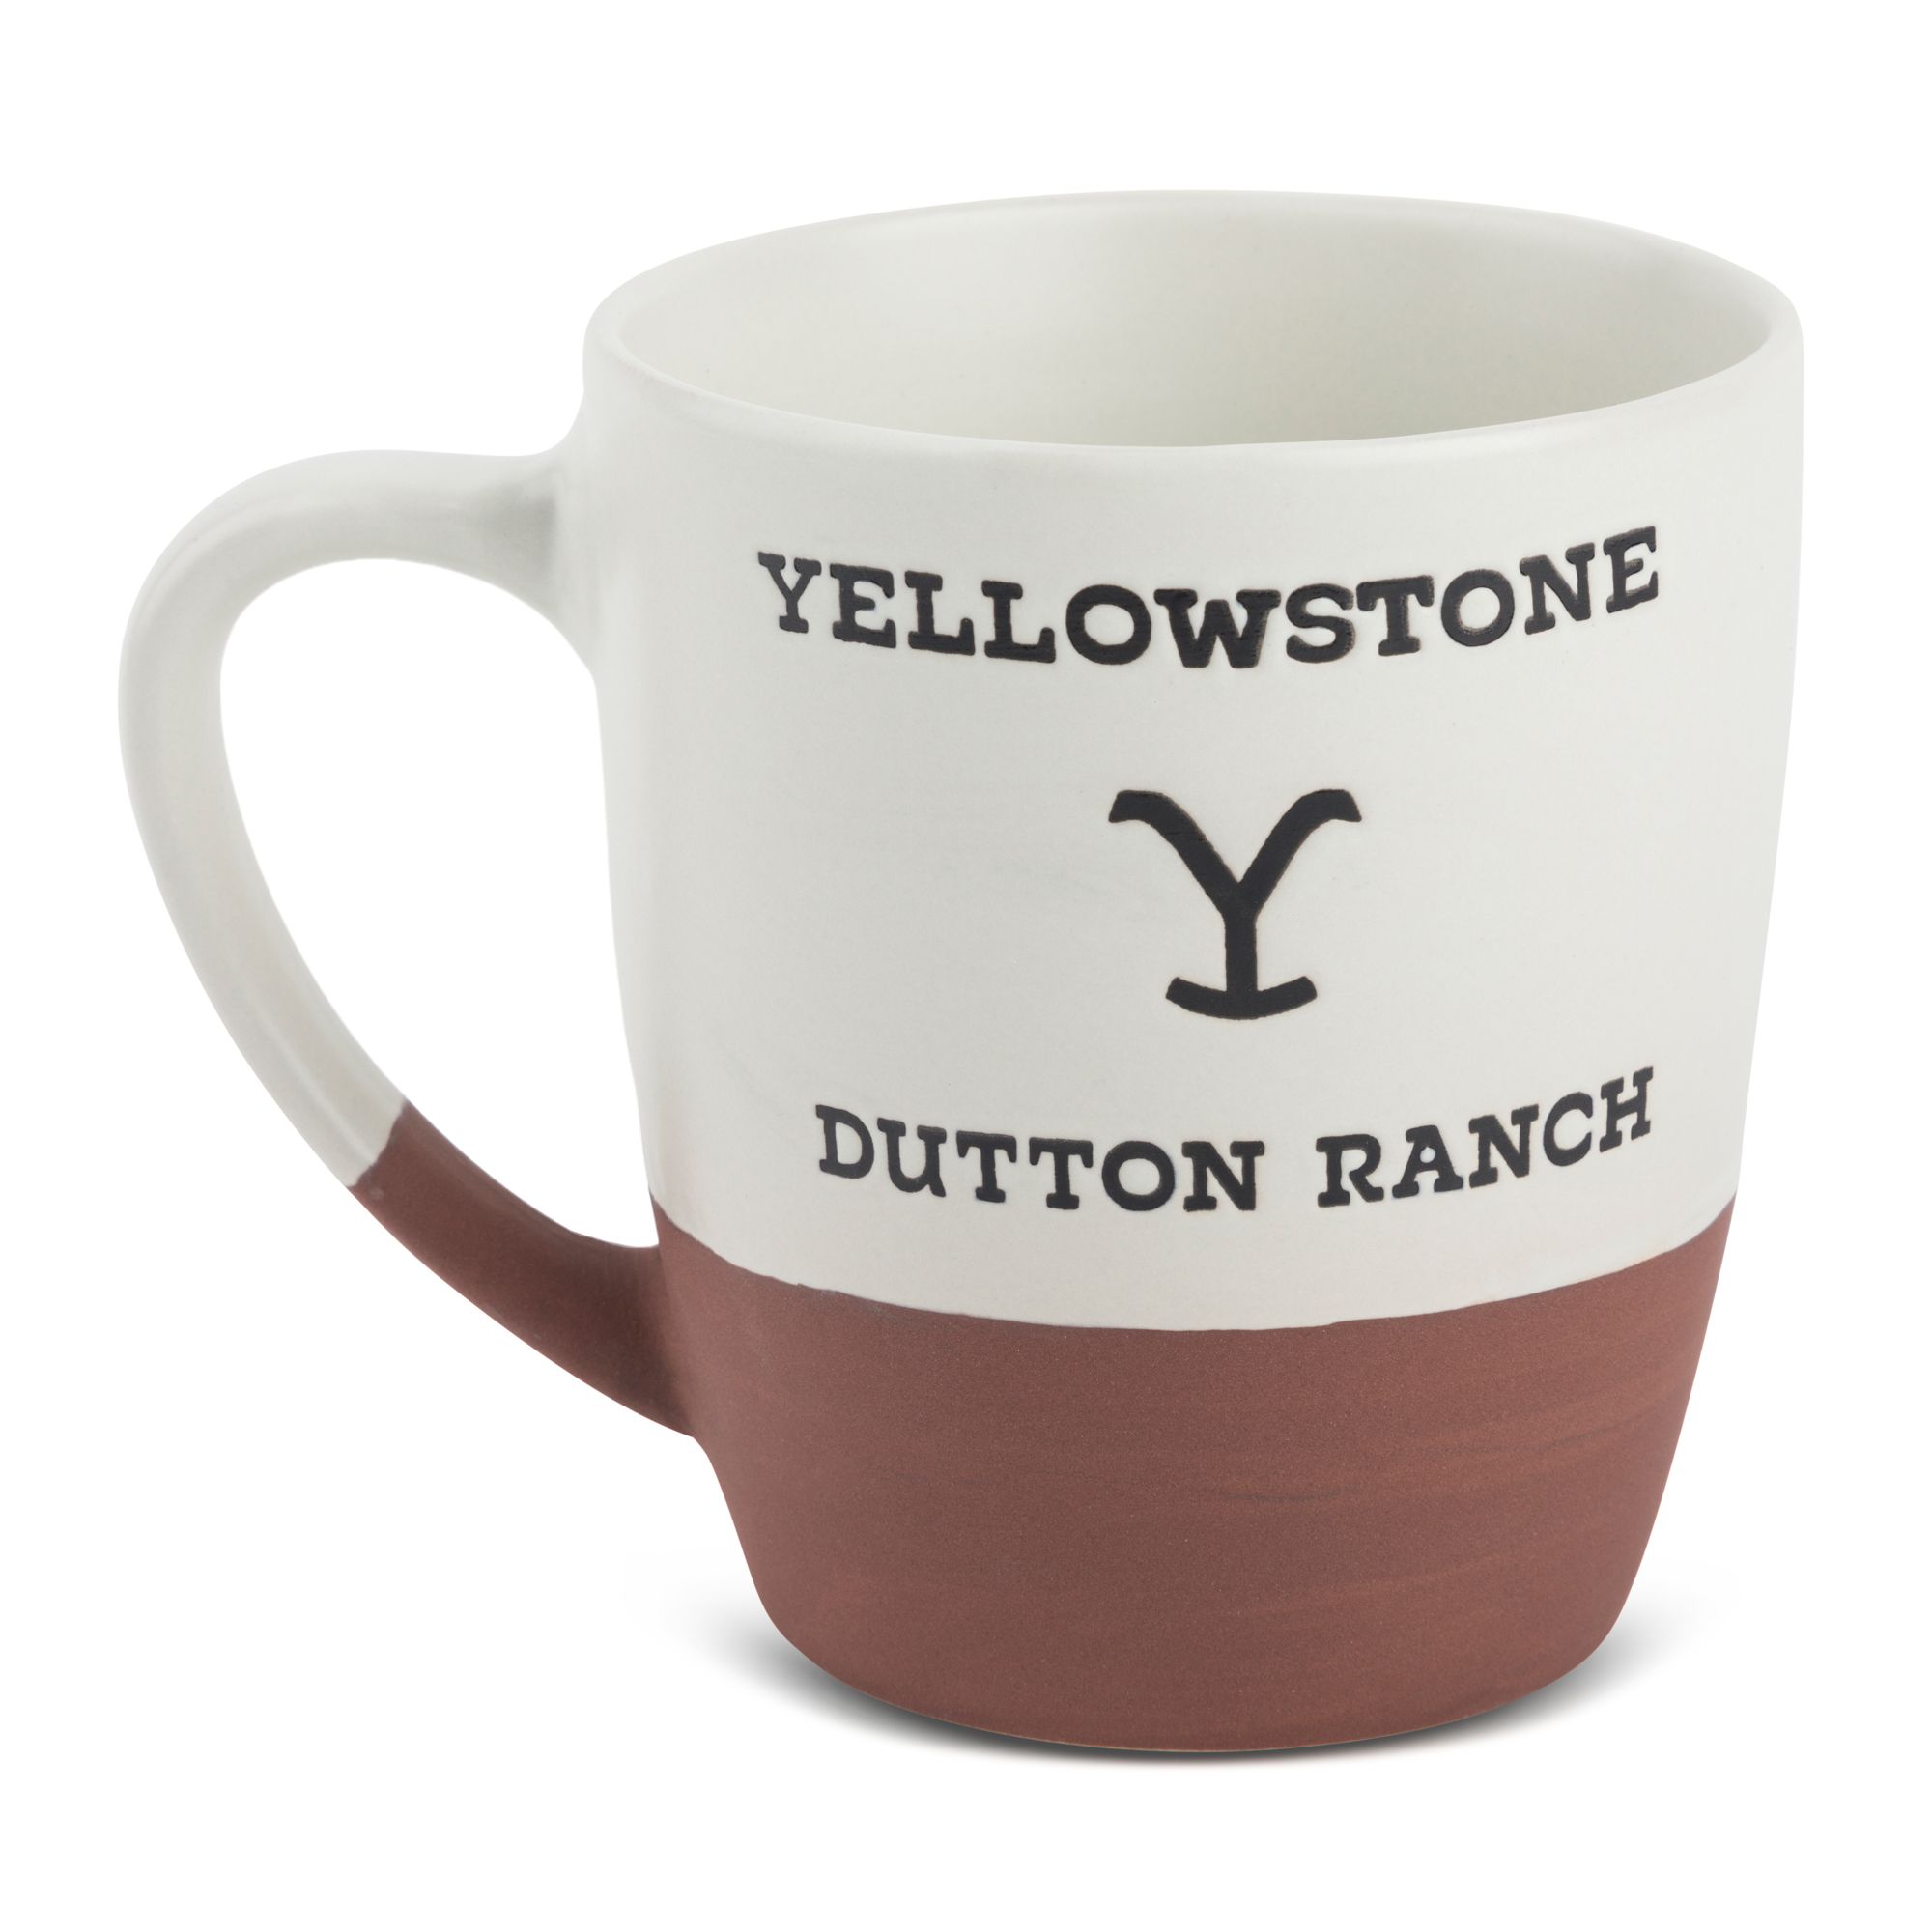 Yellowstone Dutton Ranch Stoneware Coffee Mug, 16oz | Walmart (US)